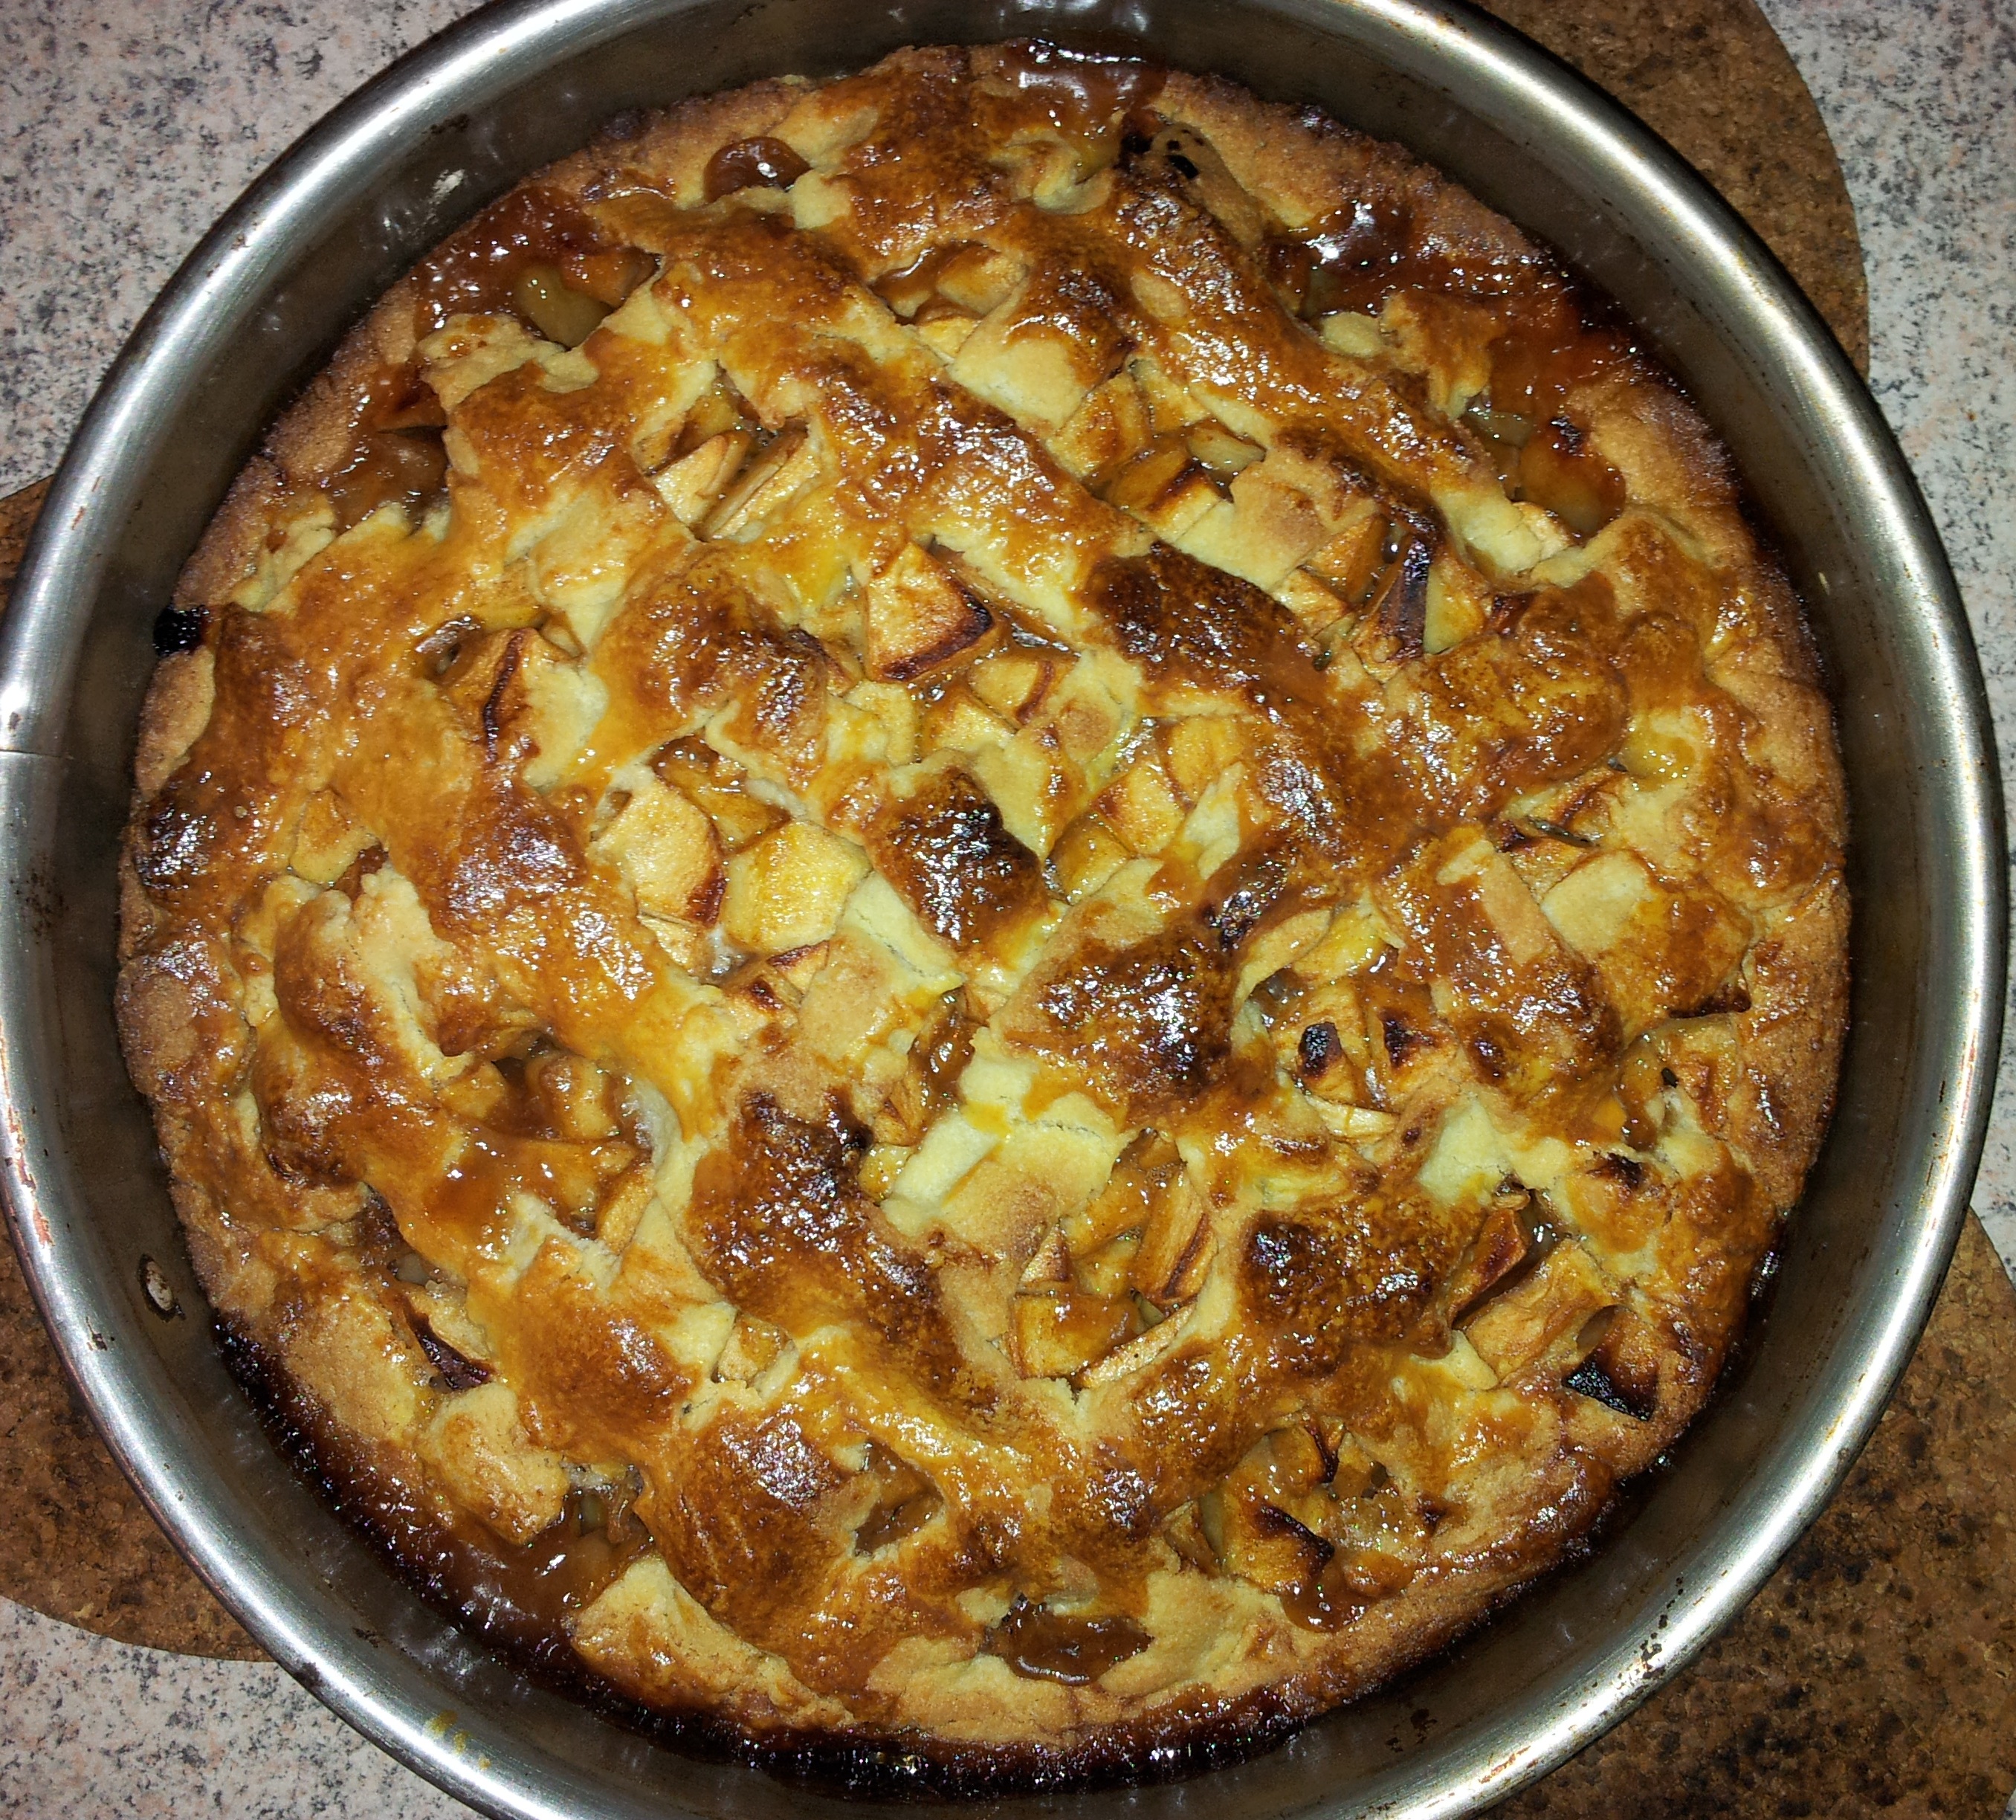 Apple Pie - before baking